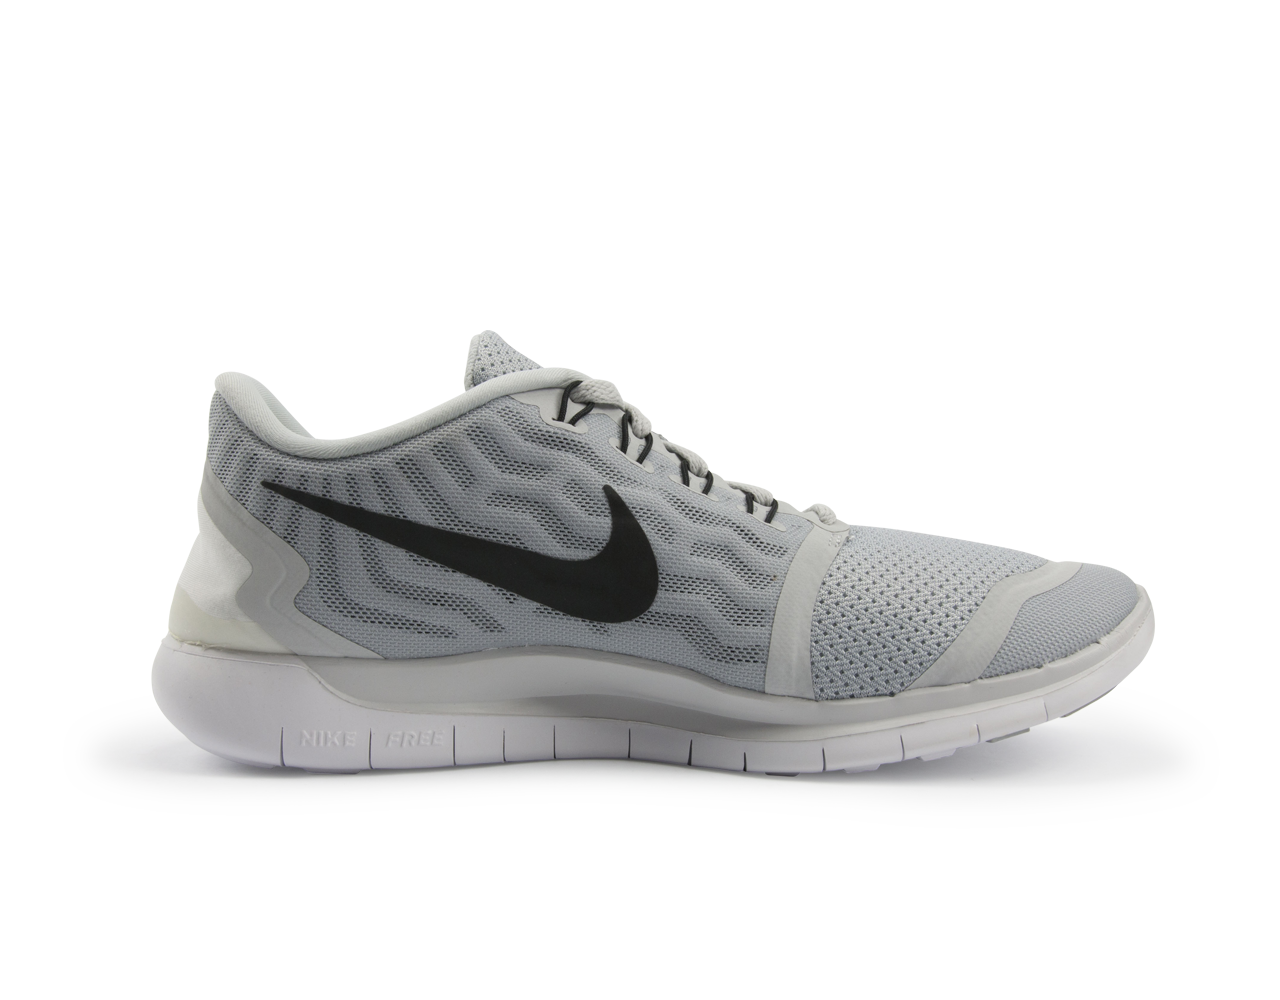 Nike Men's Free 5.0 Running Shoes Pure Platinum/Black/Wolf Grey